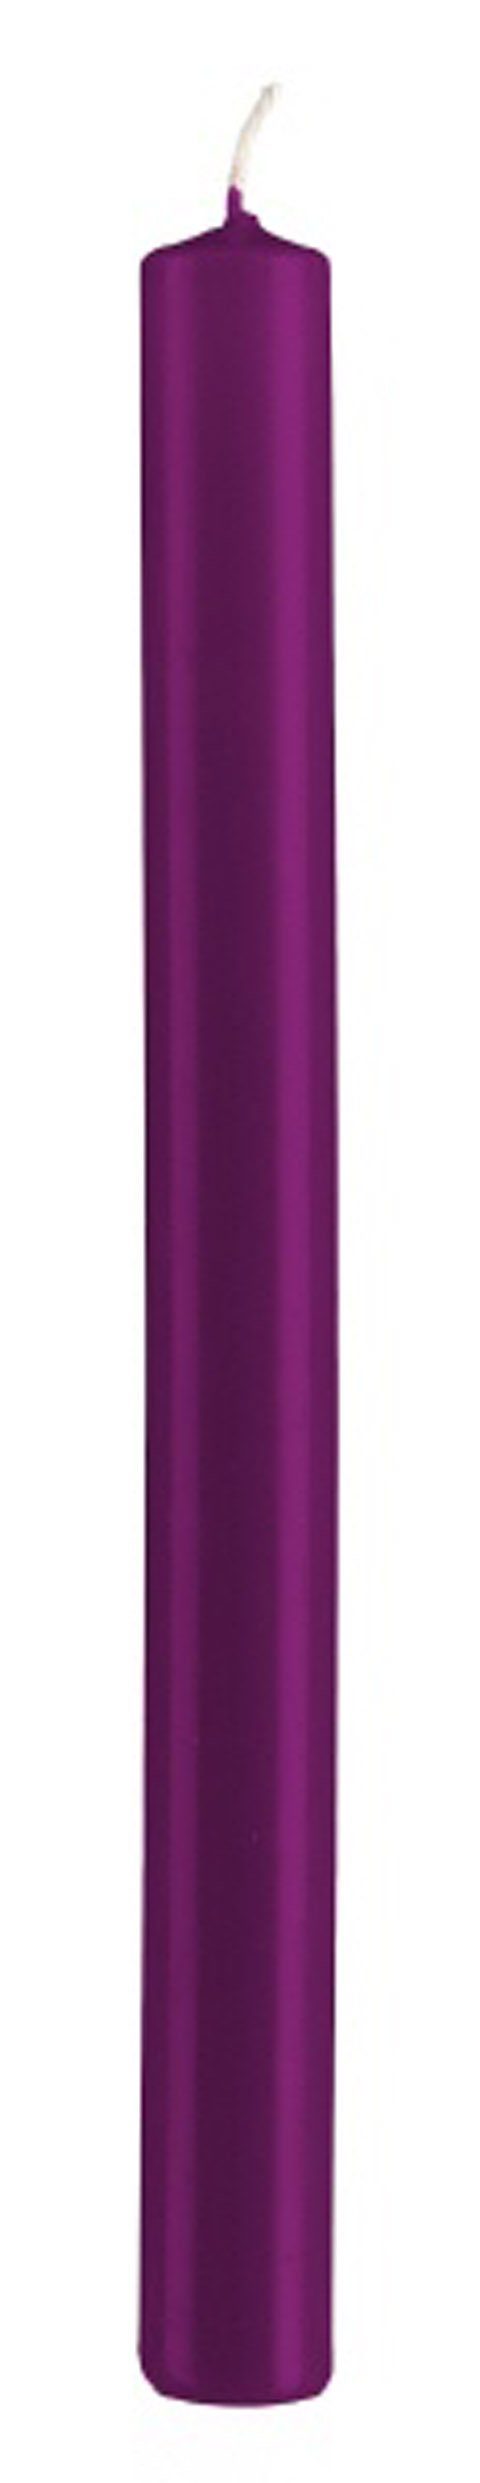 Kopschitz Kerzen Tafelkerze Stabkerzen Violett 250 x Ø 22 mm, 10 Stück